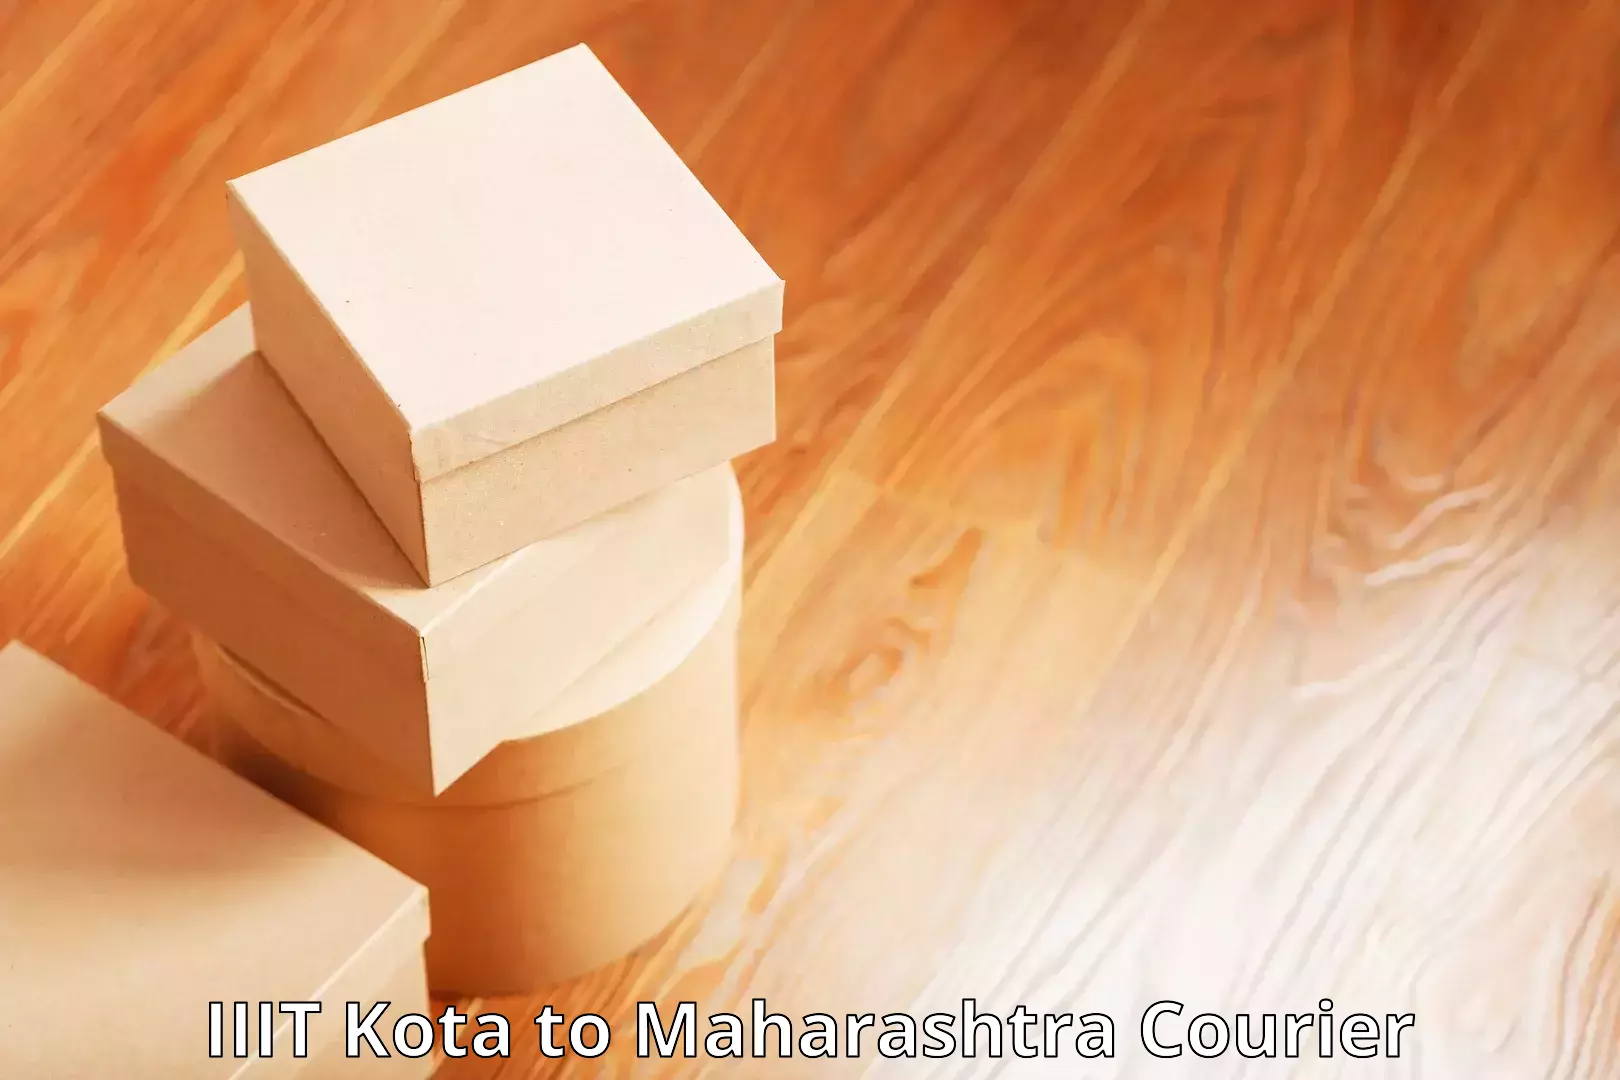 Postal and courier services IIIT Kota to Maharashtra